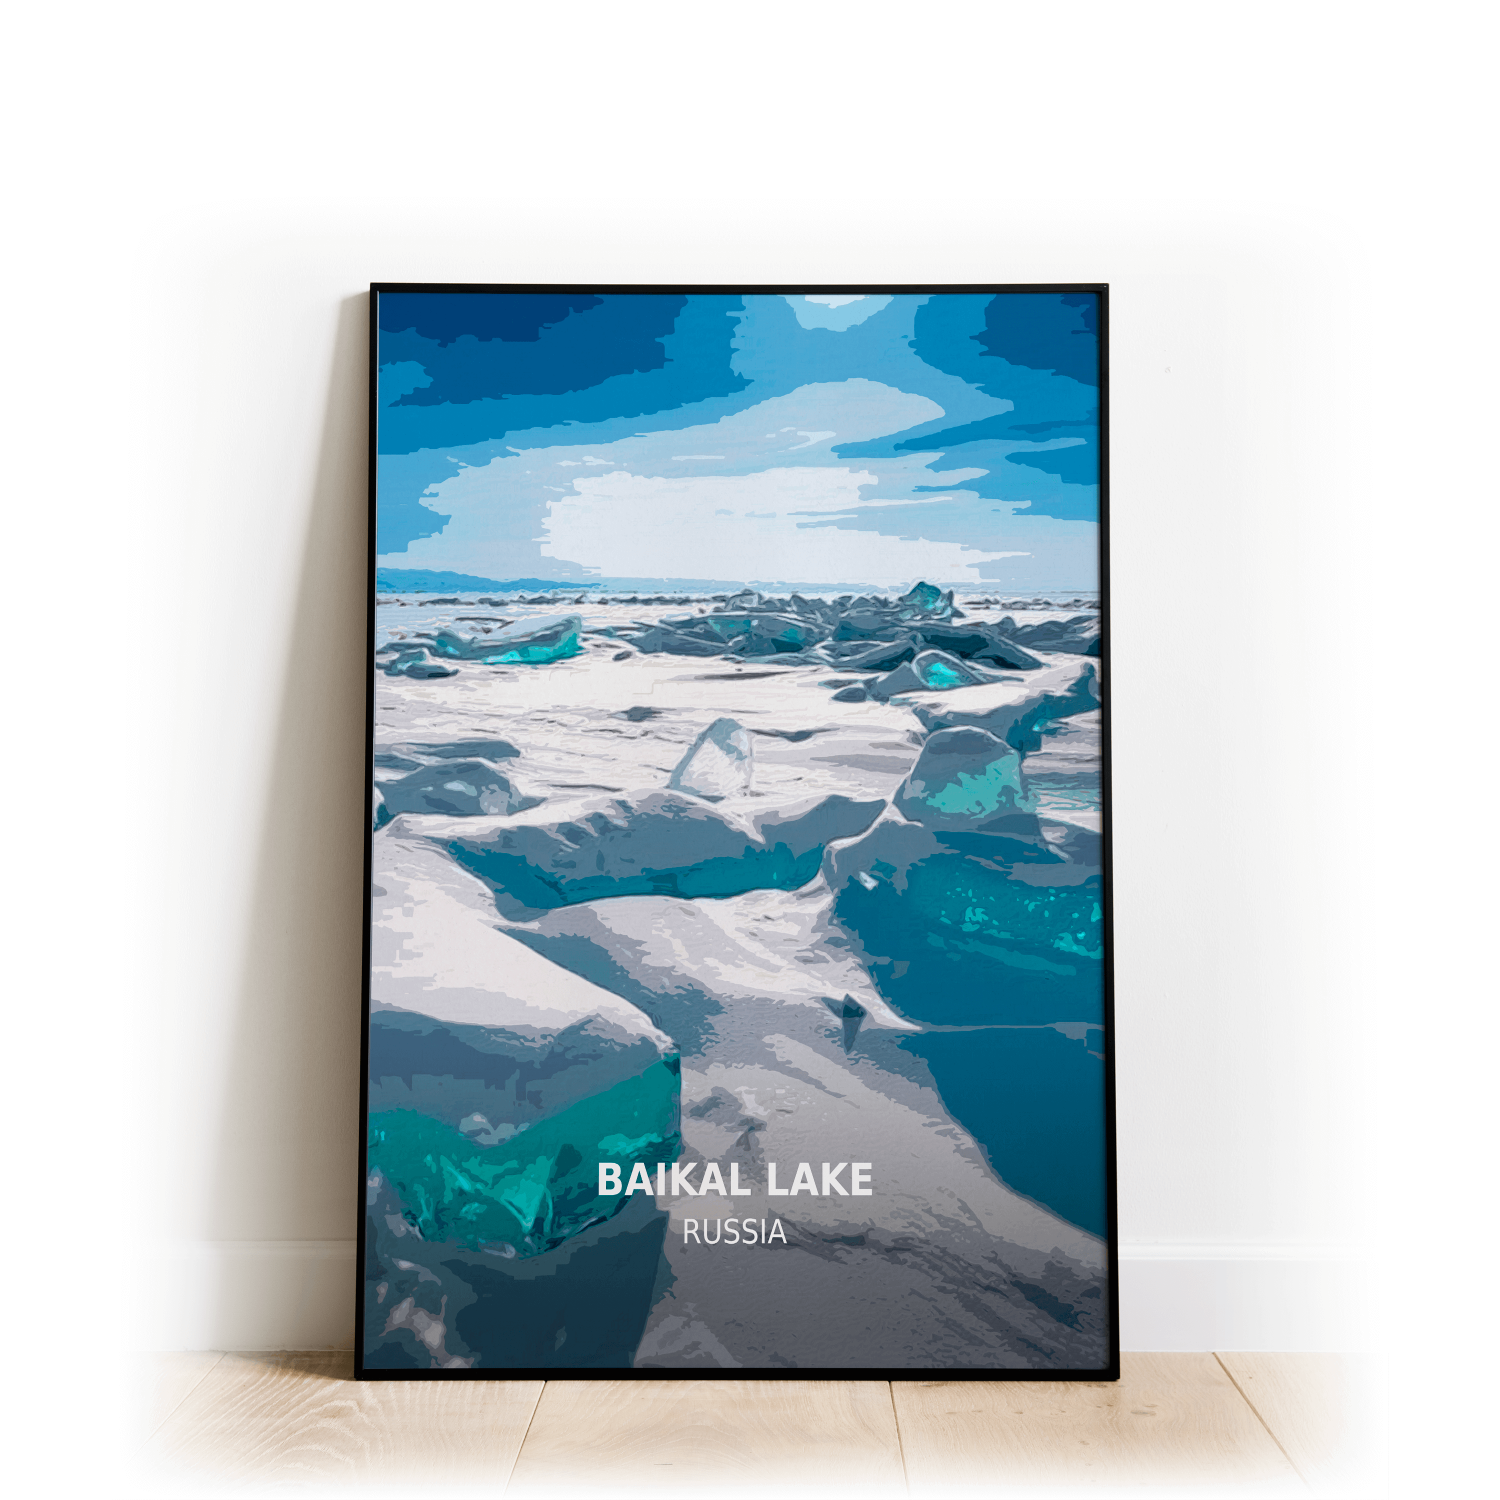 Baikal Lake - Russia - Print - A4 - Standard - Print Only